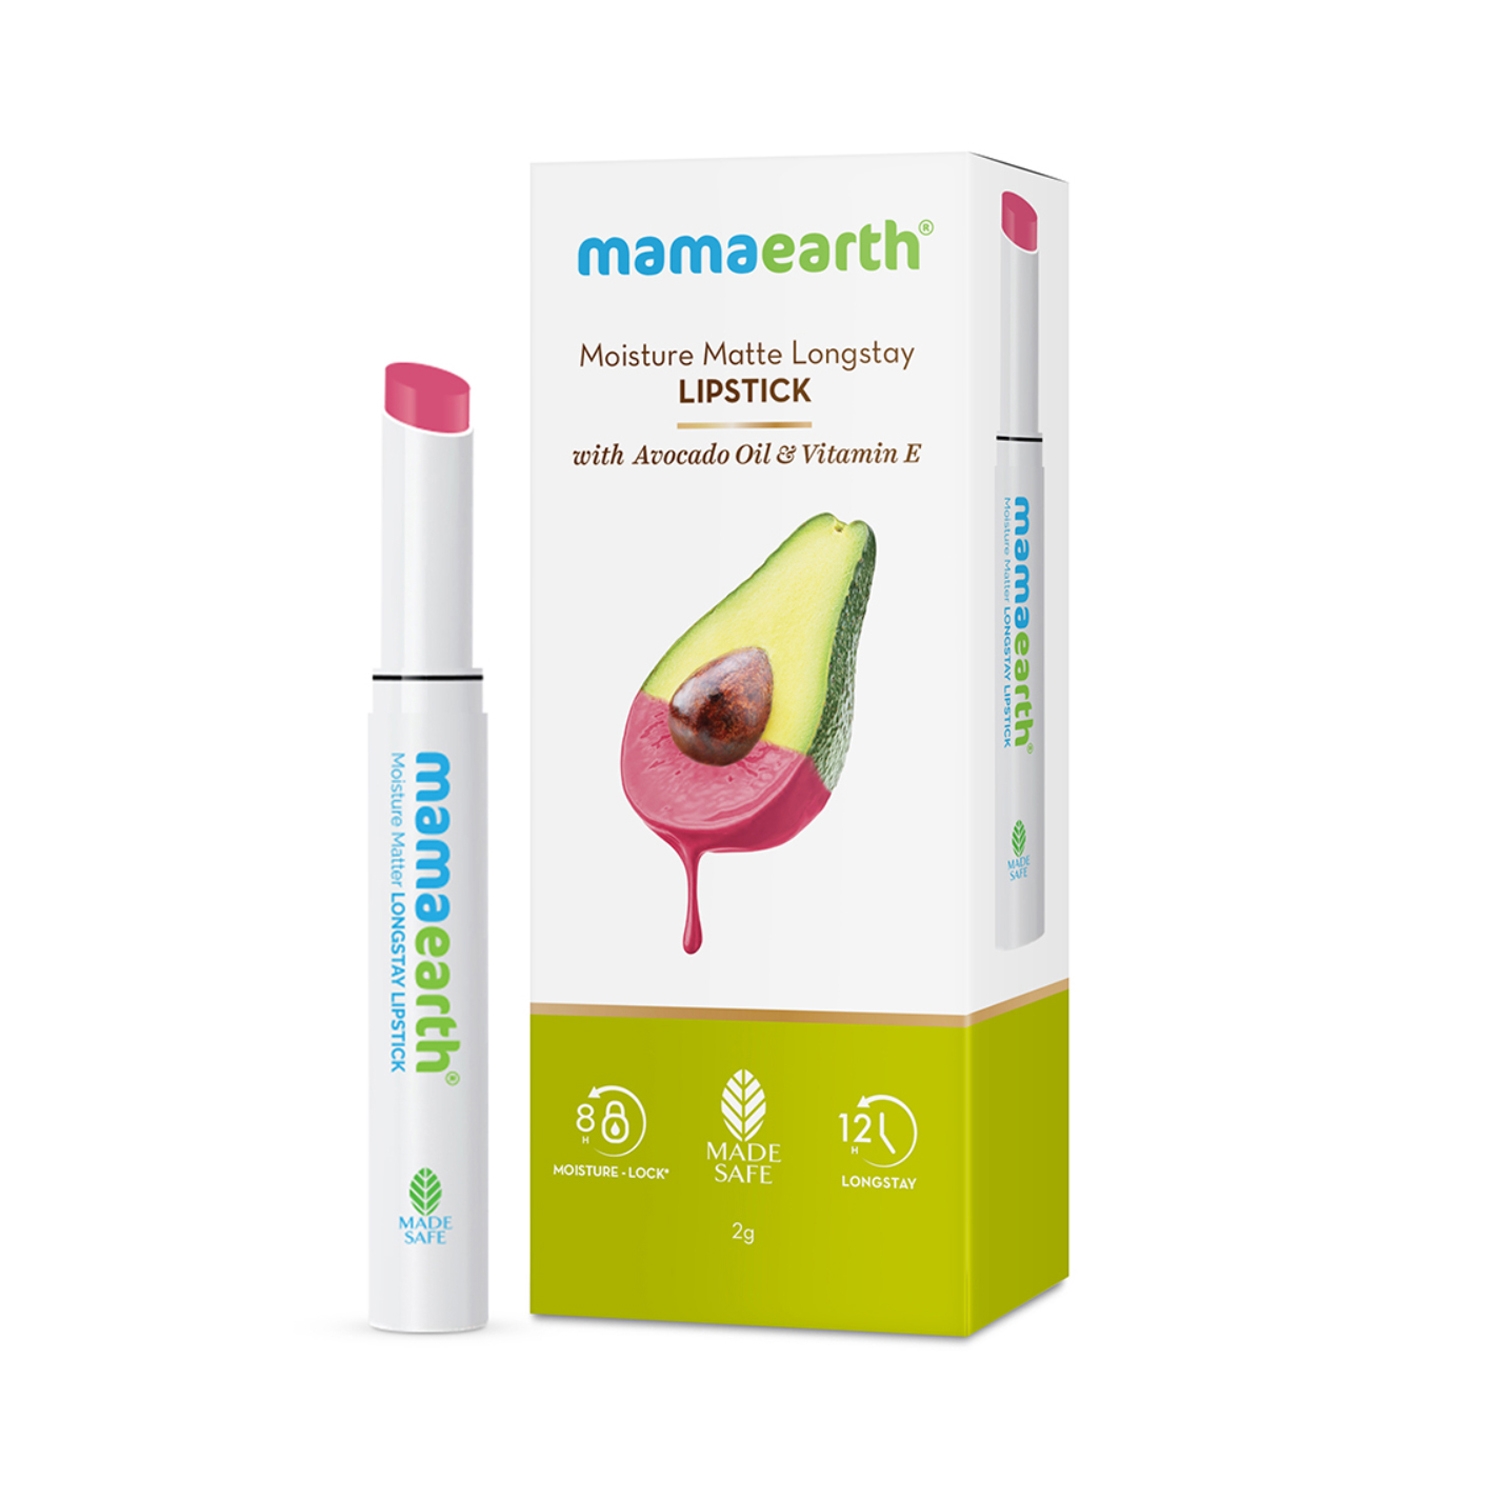 Mamaearth Moisture Matte Longstay Lipstick With Avocado Oil & Vitamin E - 03 Candyfloss Pink (2g)